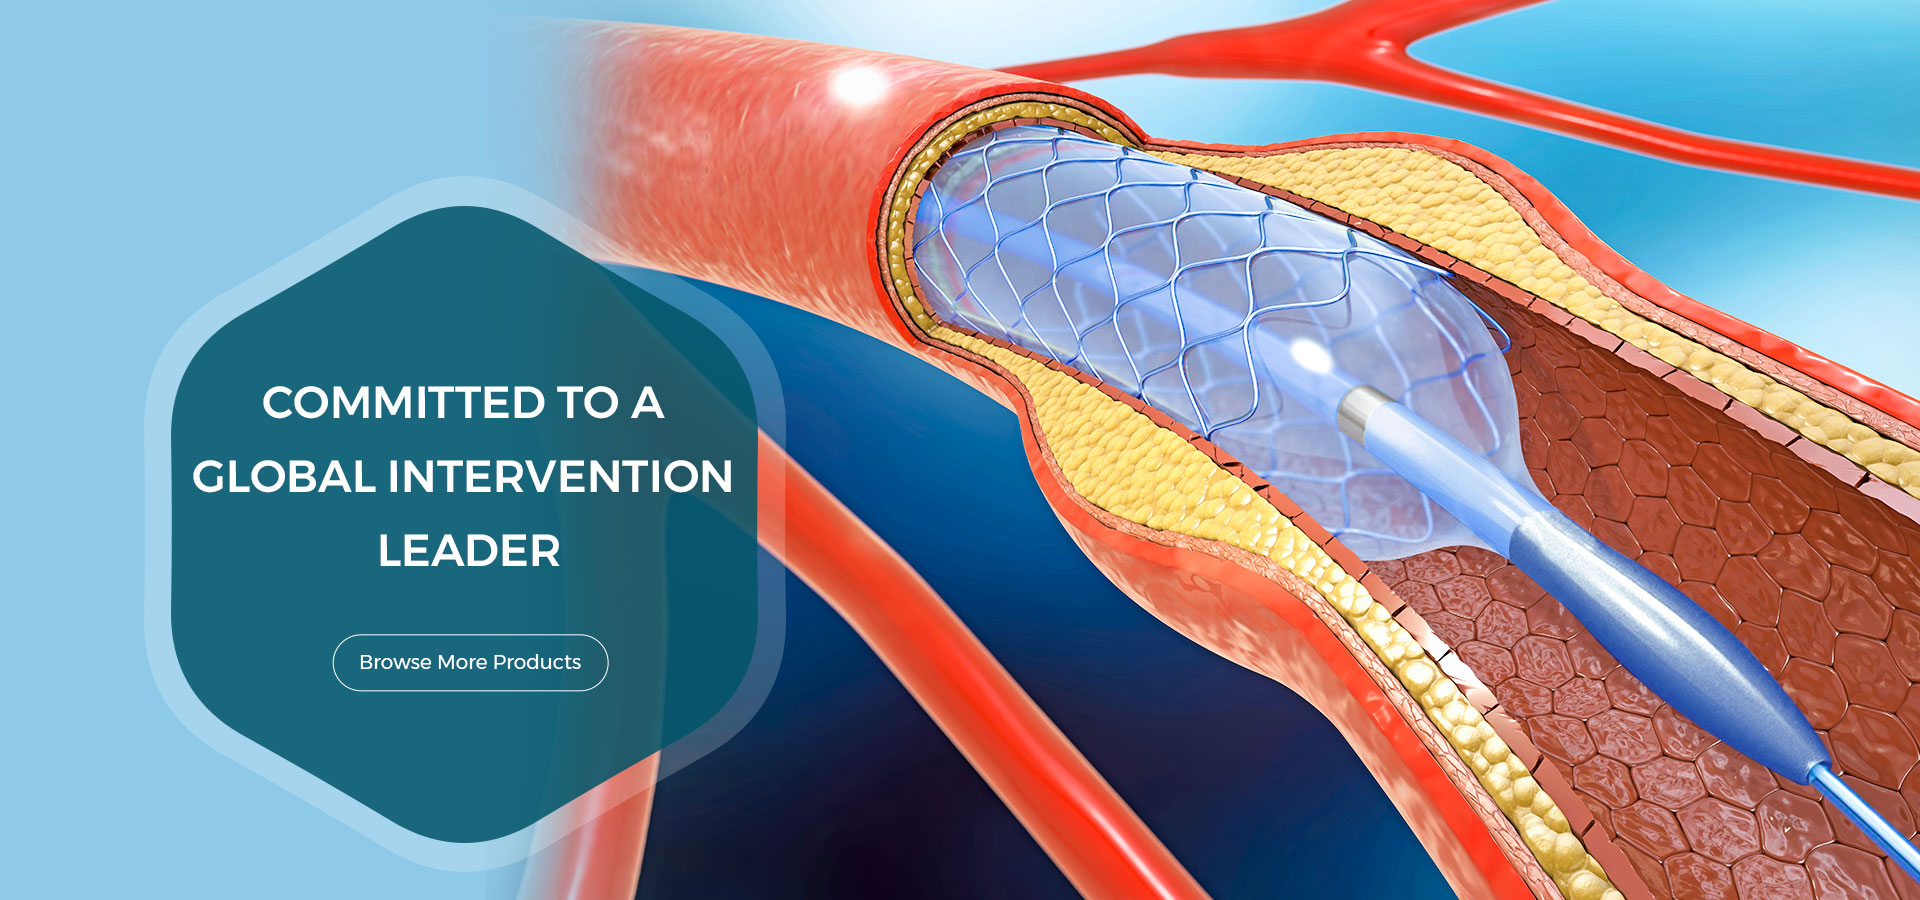 PTCA Balloon catheter、Drug-eluting stent